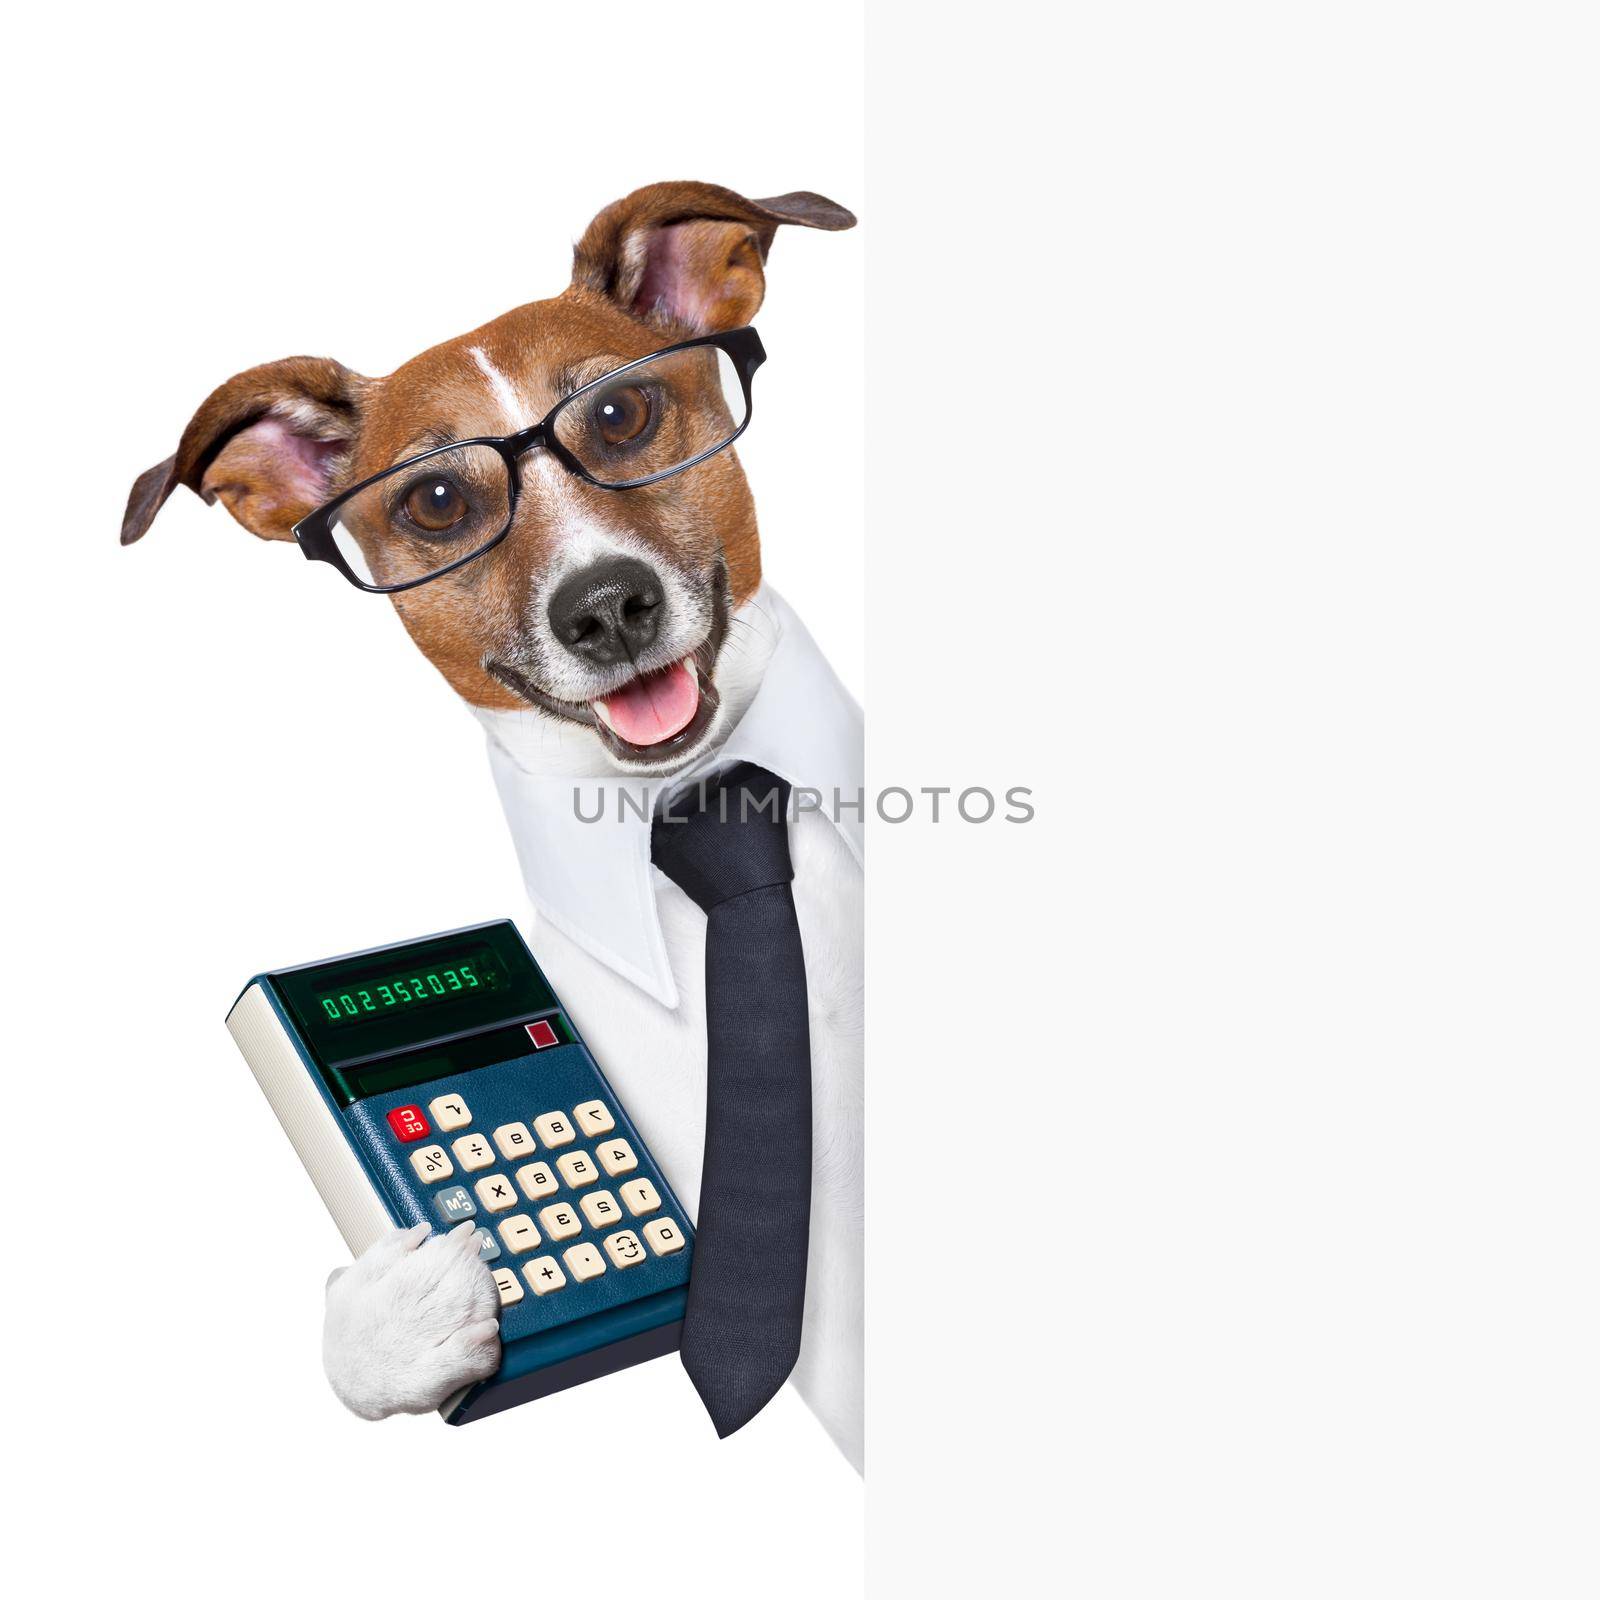 accountant dog  by Brosch